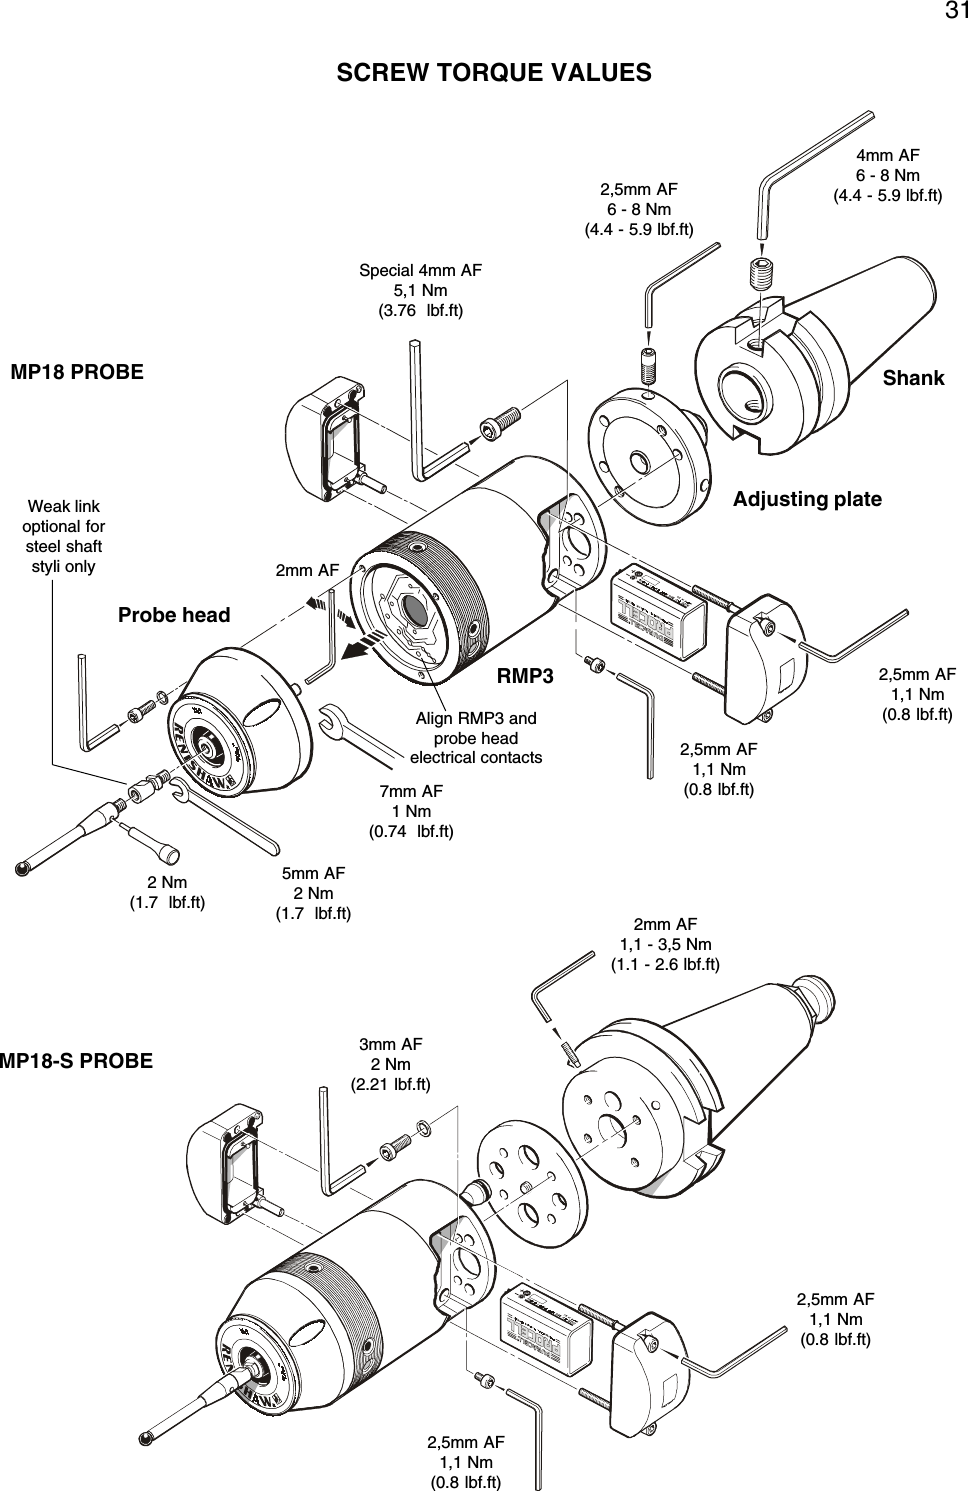 31SCREW TORQUE VALUES4mm AF6 - 8 Nm(4.4 - 5.9 lbf.ft)ShankMP18 PROBEMP18-S PROBE2,5mm AF6 - 8 Nm(4.4 - 5.9 lbf.ft)Special 4mm AF5,1 Nm(3.76  lbf.ft)Adjusting plateRMP3Probe head2,5mm AF1,1 Nm(0.8 lbf.ft)2,5mm AF1,1 Nm(0.8 lbf.ft)7mm AF1 Nm(0.74  lbf.ft)5mm AF2 Nm(1.7  lbf.ft)2 Nm(1.7  lbf.ft)Weak linkoptional forsteel shaftstyli only 2mm AFAlign RMP3 andprobe headelectrical contacts2mm AF1,1 - 3,5 Nm(1.1 - 2.6 lbf.ft)3mm AF2 Nm(2.21 lbf.ft)2,5mm AF1,1 Nm(0.8 lbf.ft)2,5mm AF1,1 Nm(0.8 lbf.ft)